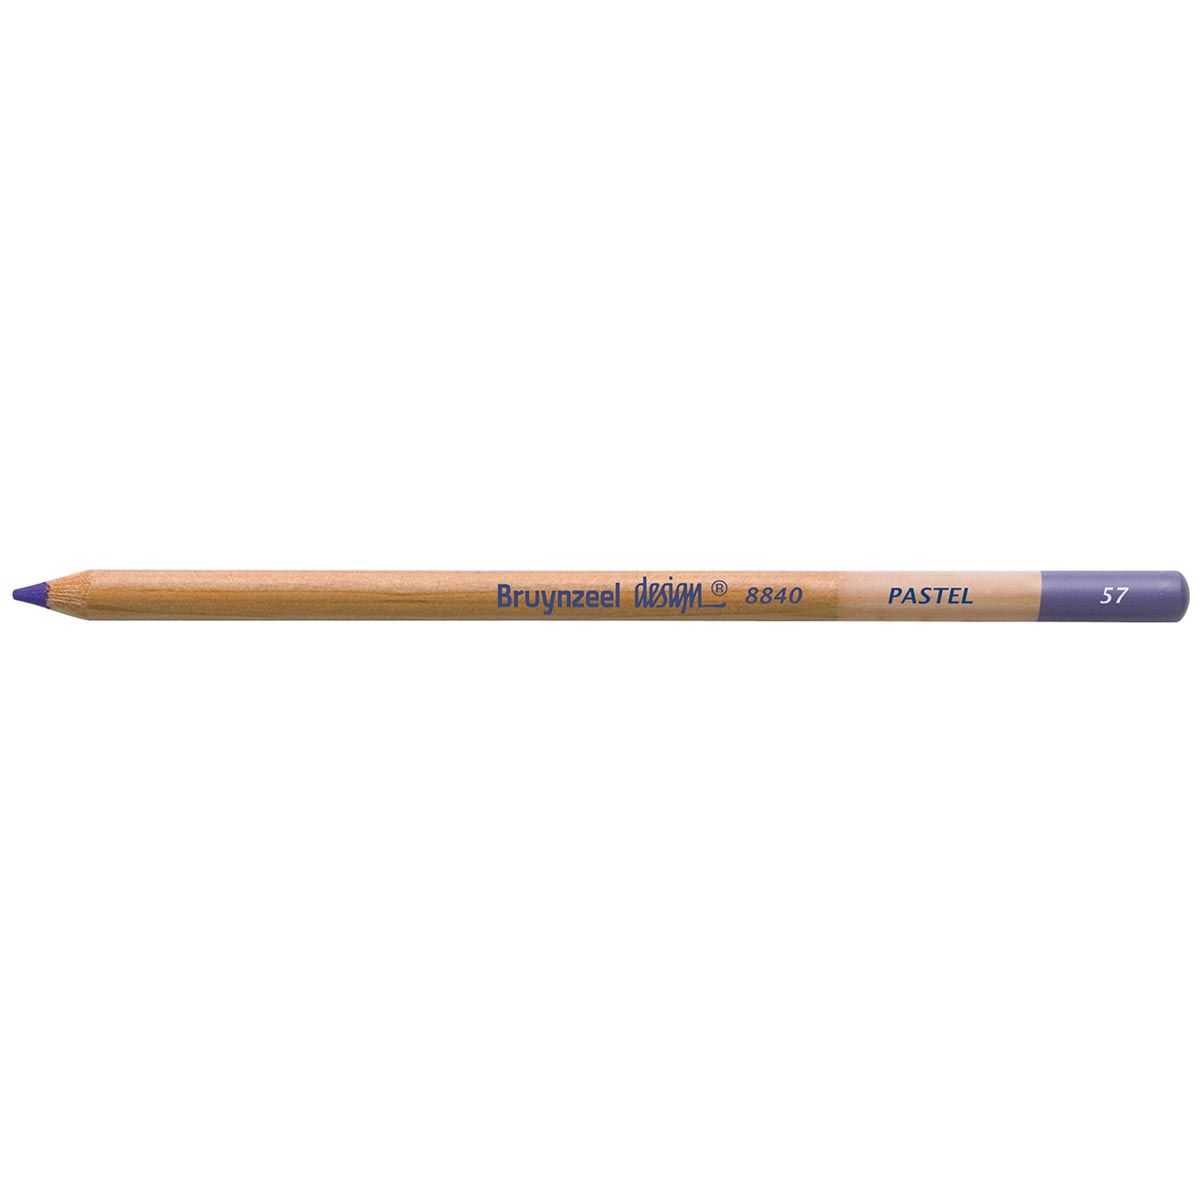 Bruynzeel Design Pastel Pencil - Blue Violet 57